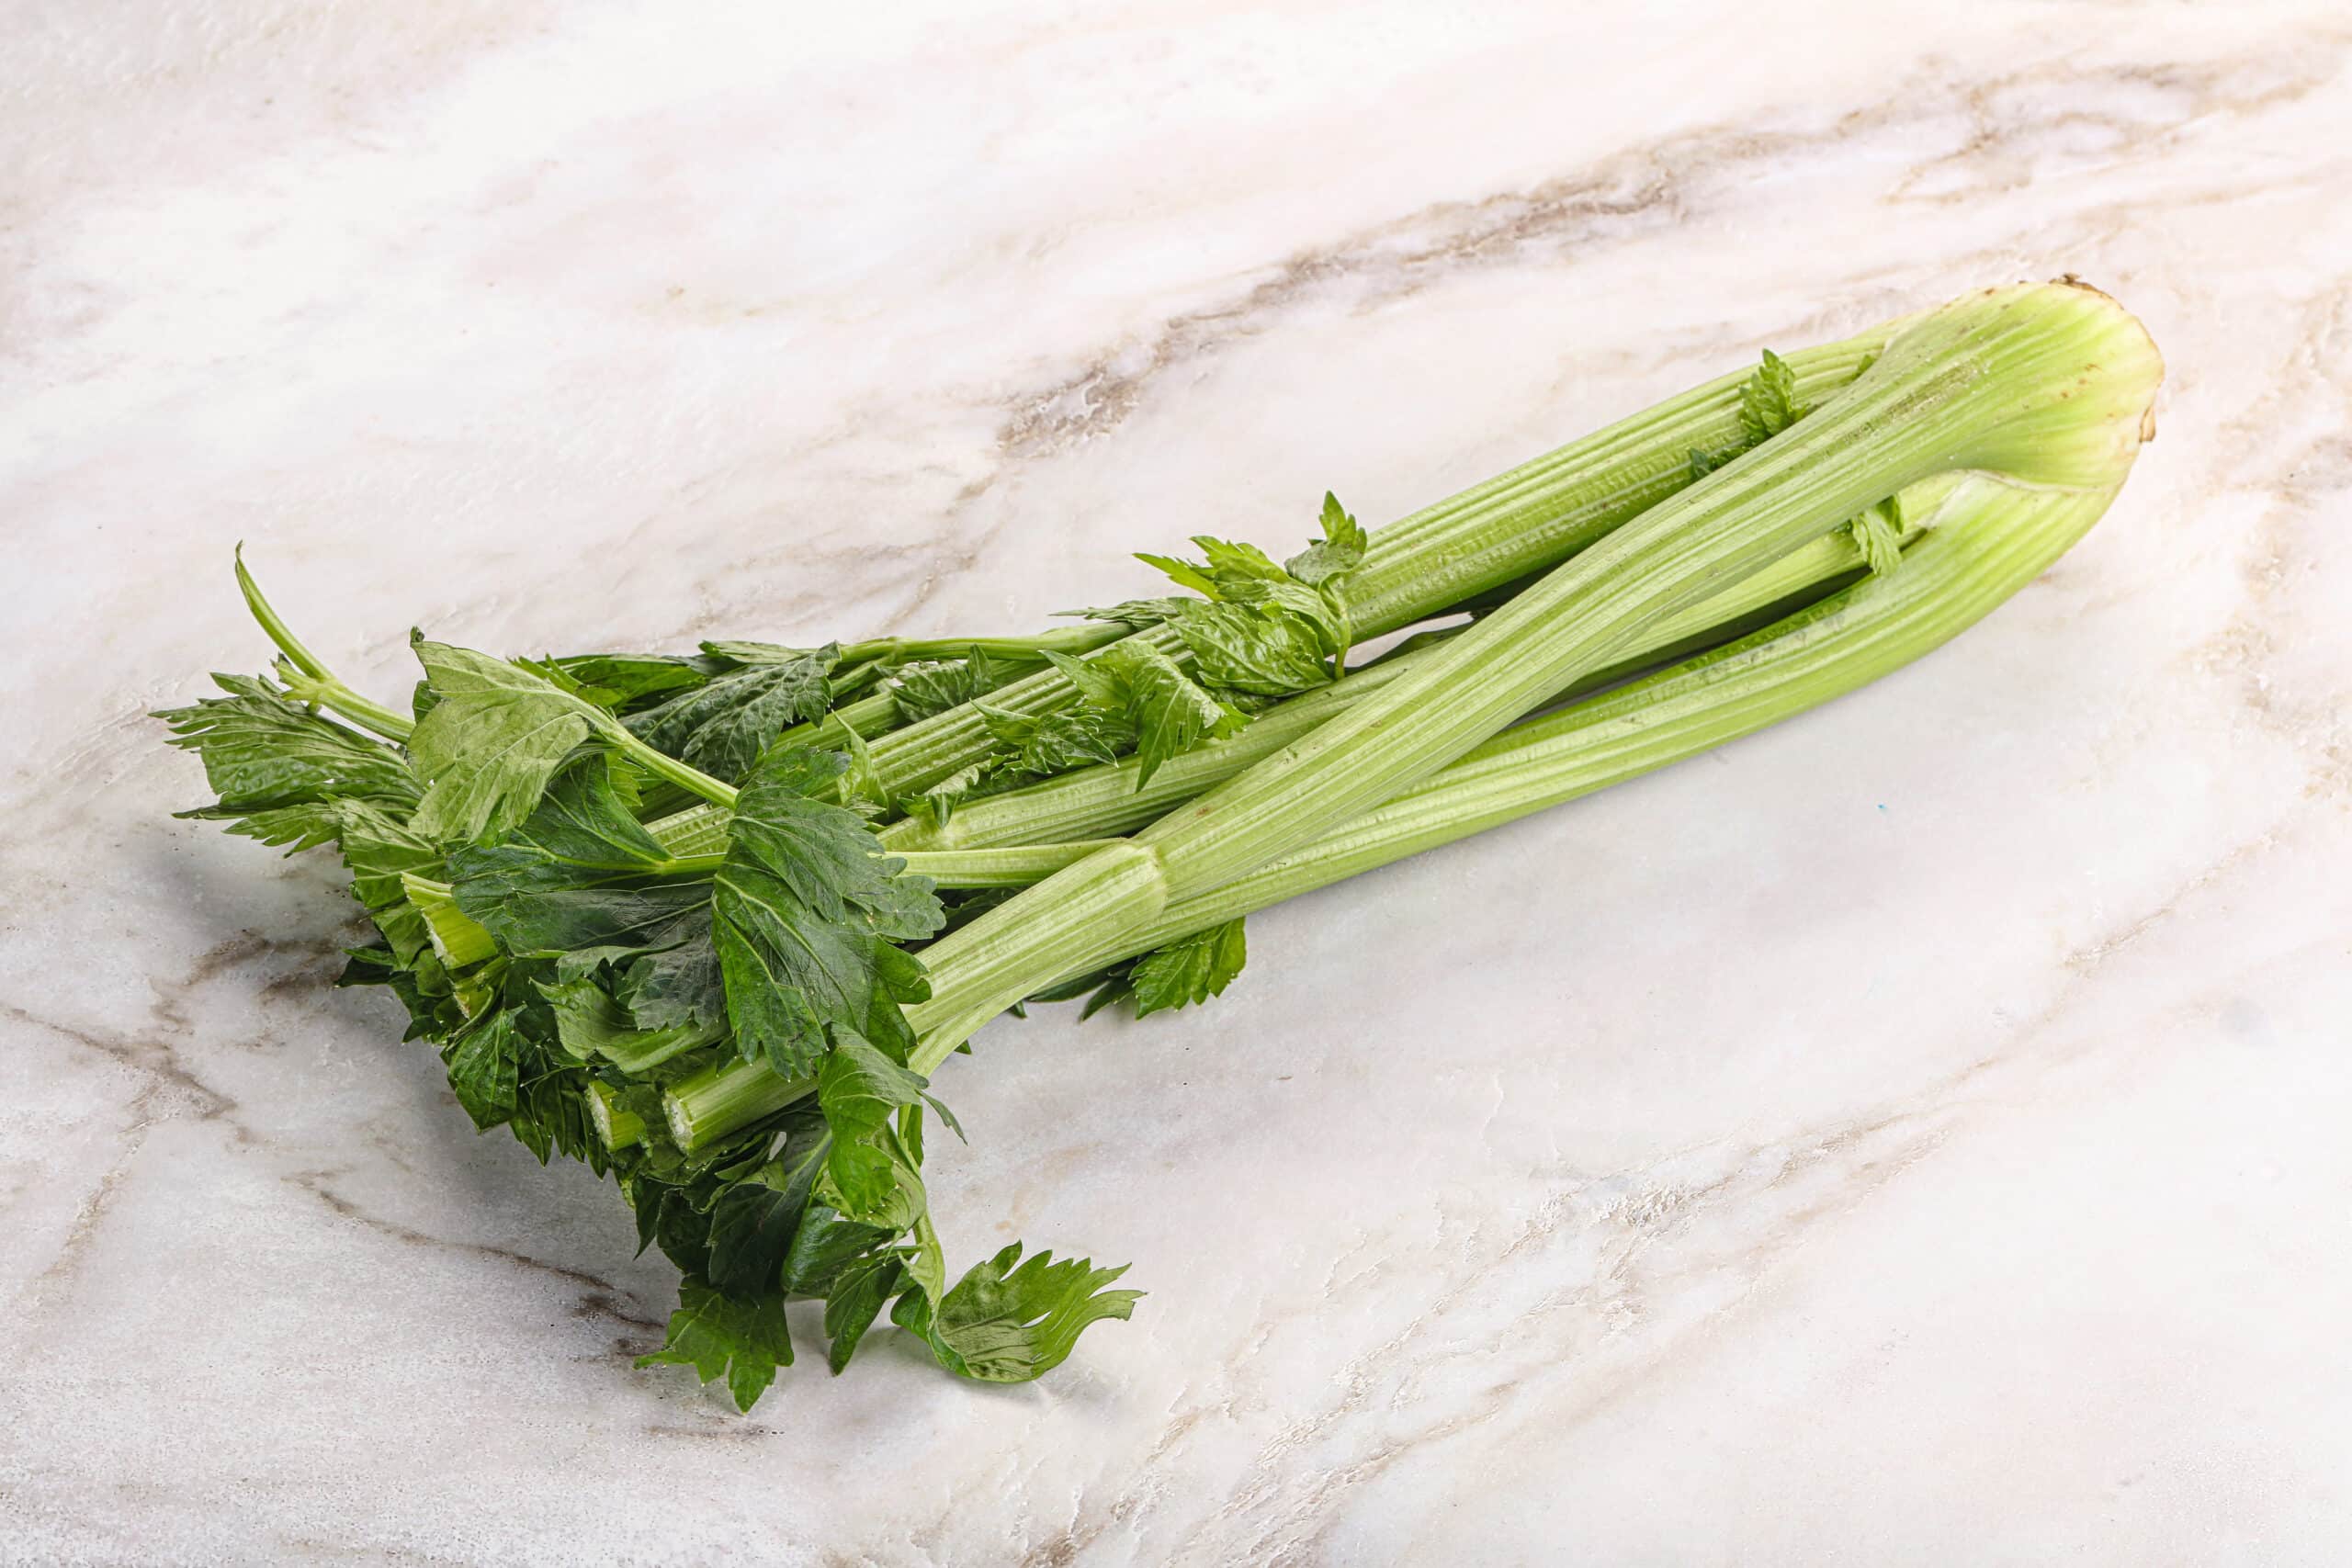 growmyownhealthfood.com : Is celery a microgreen?